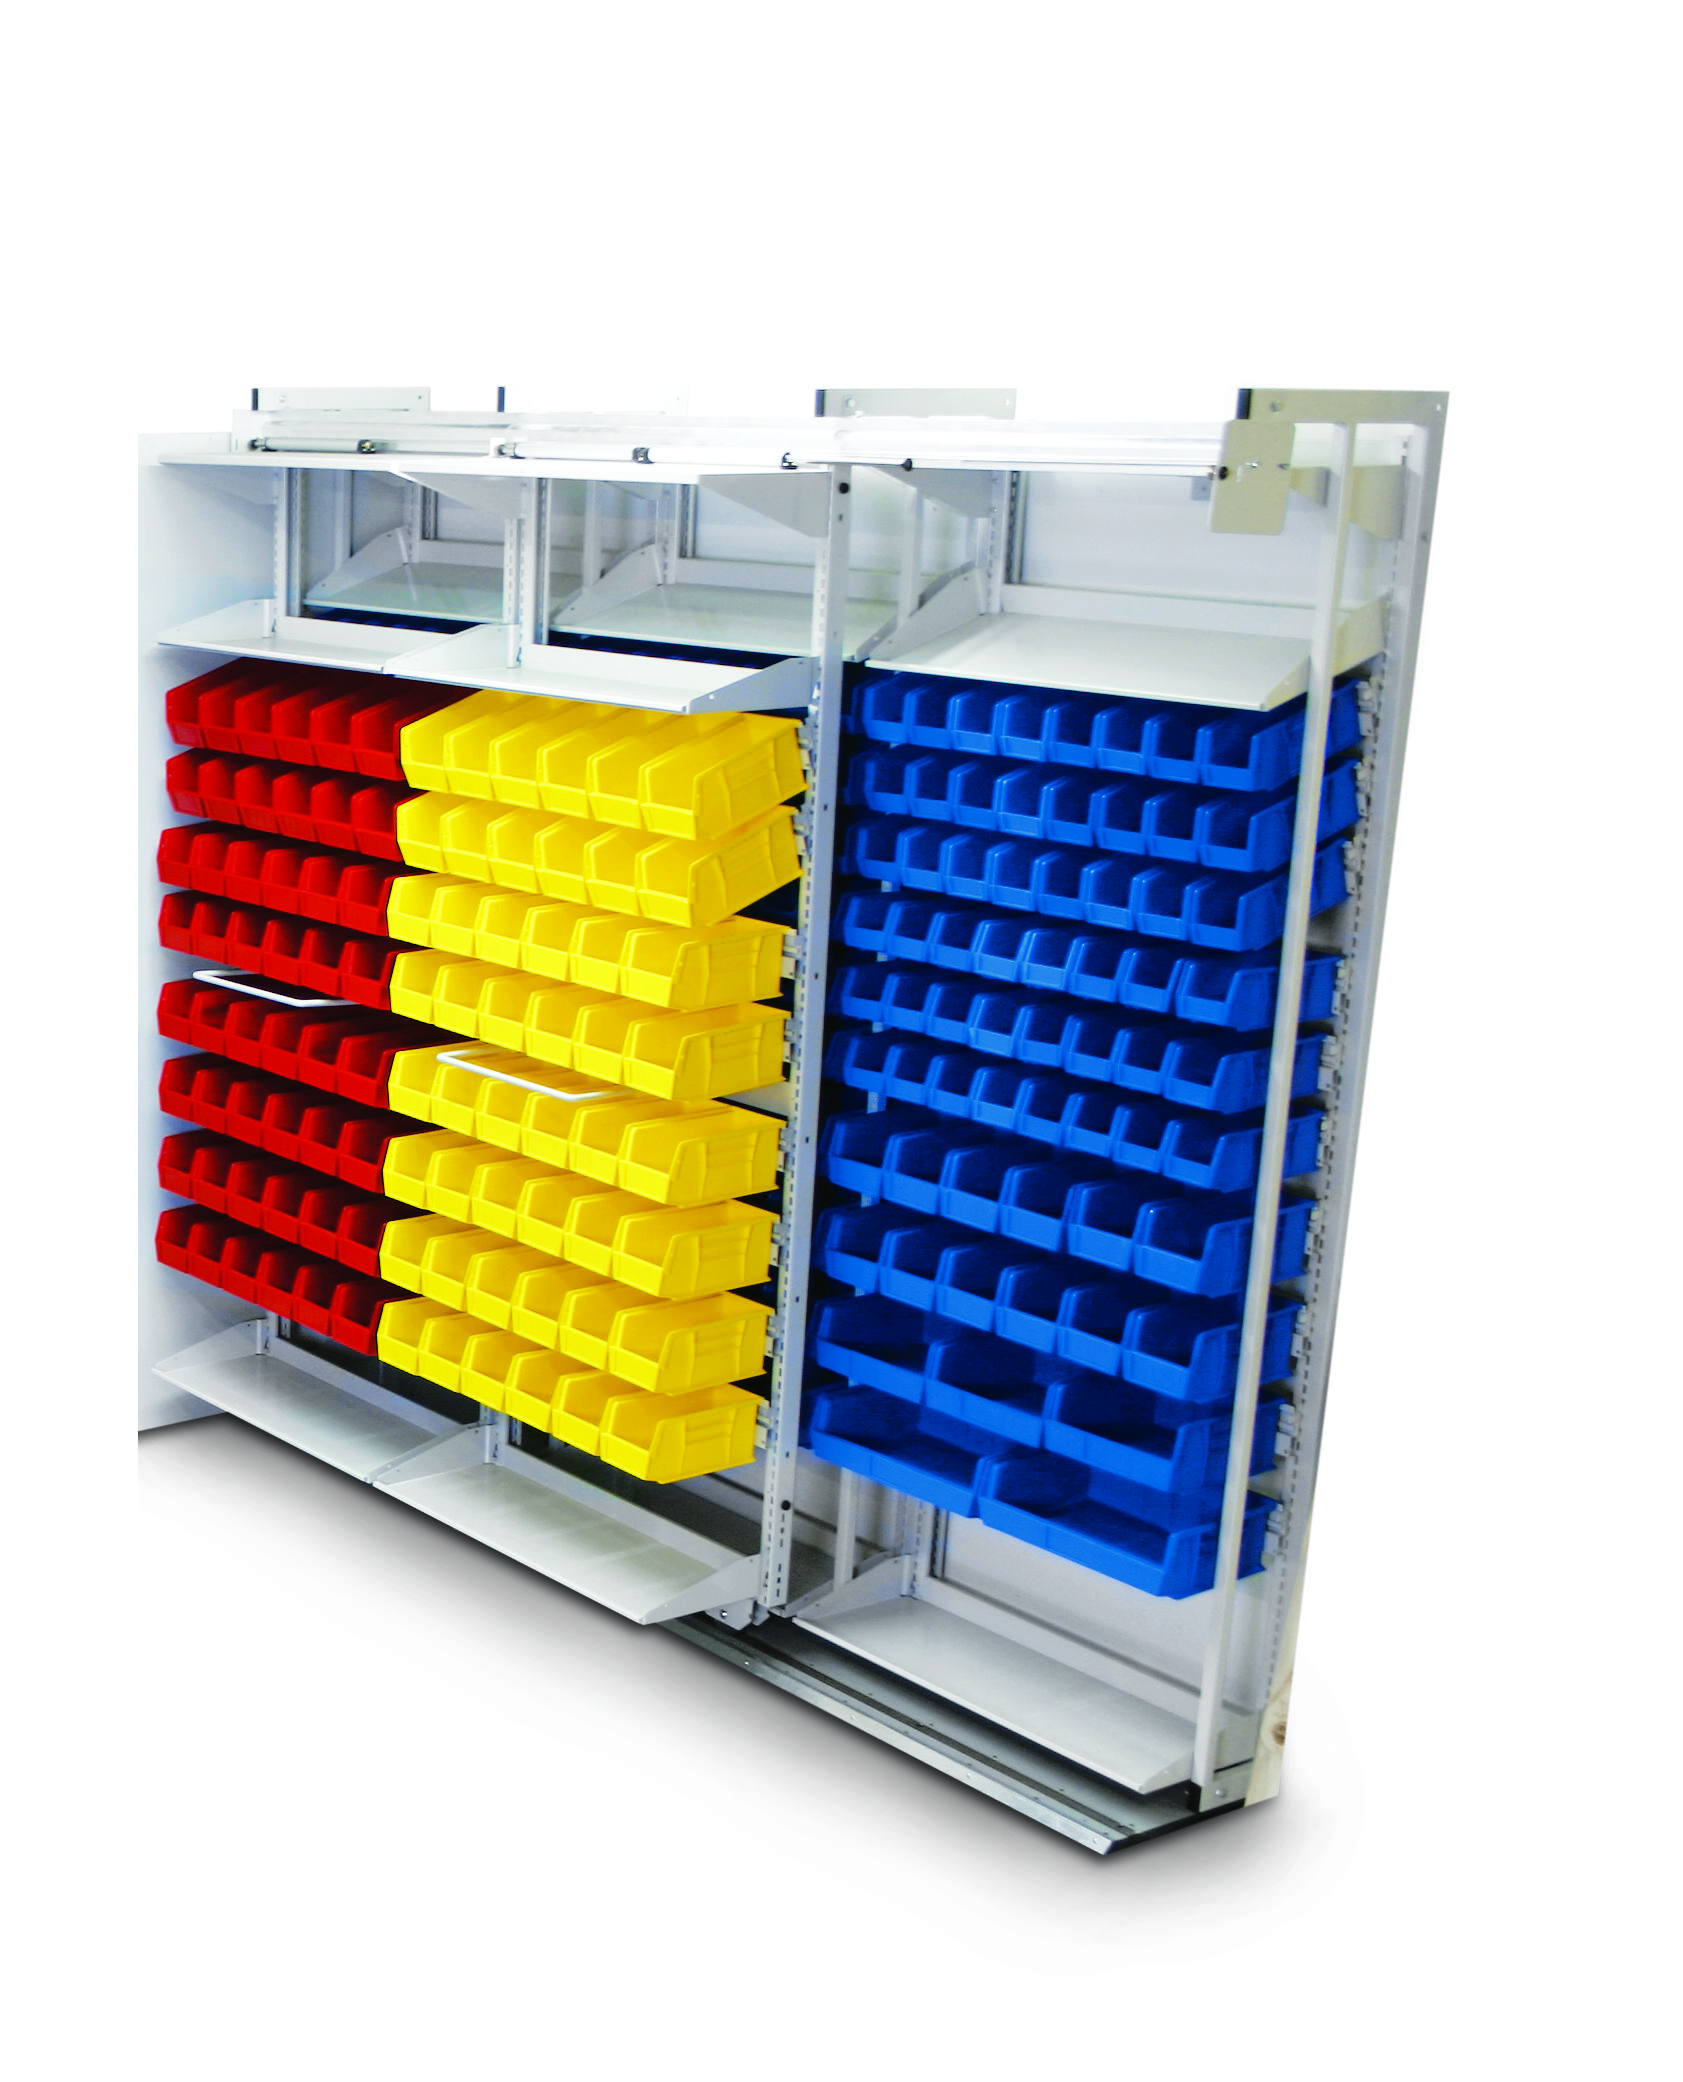 FrameWRX® Bin Shelving Modular Storage System